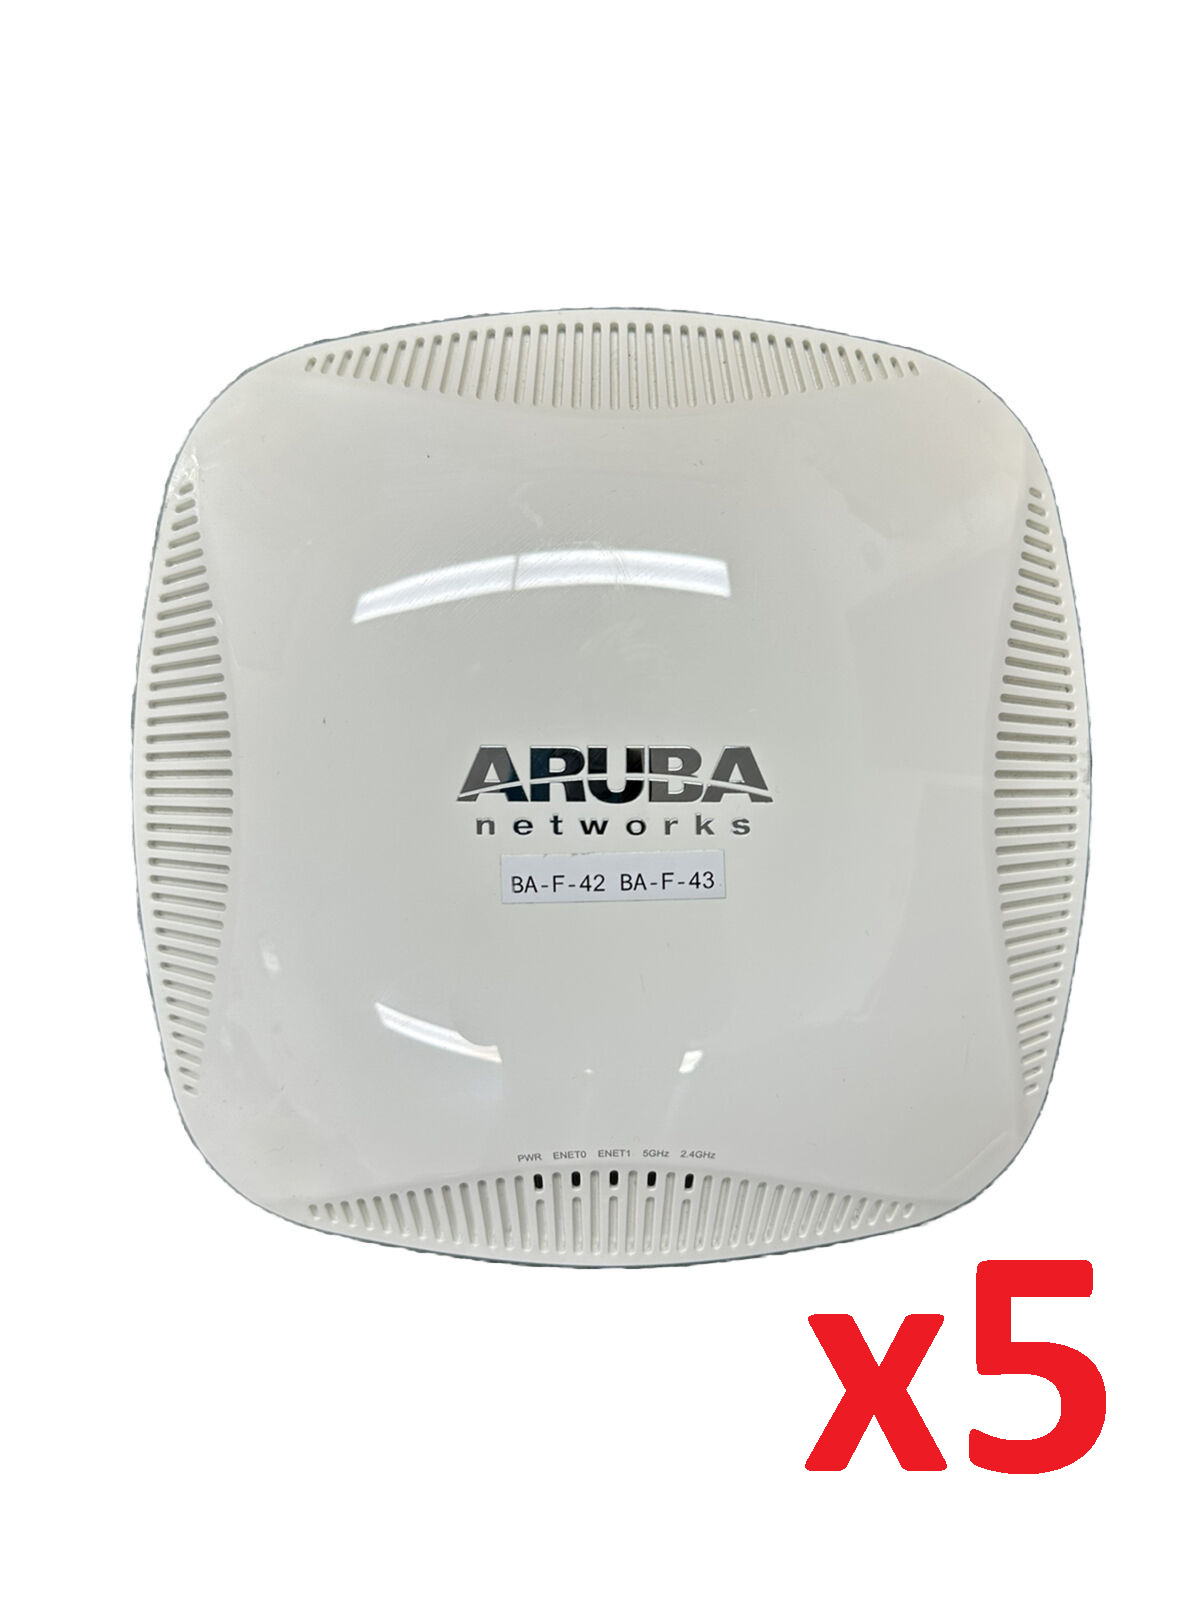 Aruba Networks IAP-225-US Wireless Access Point APIN0225 JW242 - LOT OF 5